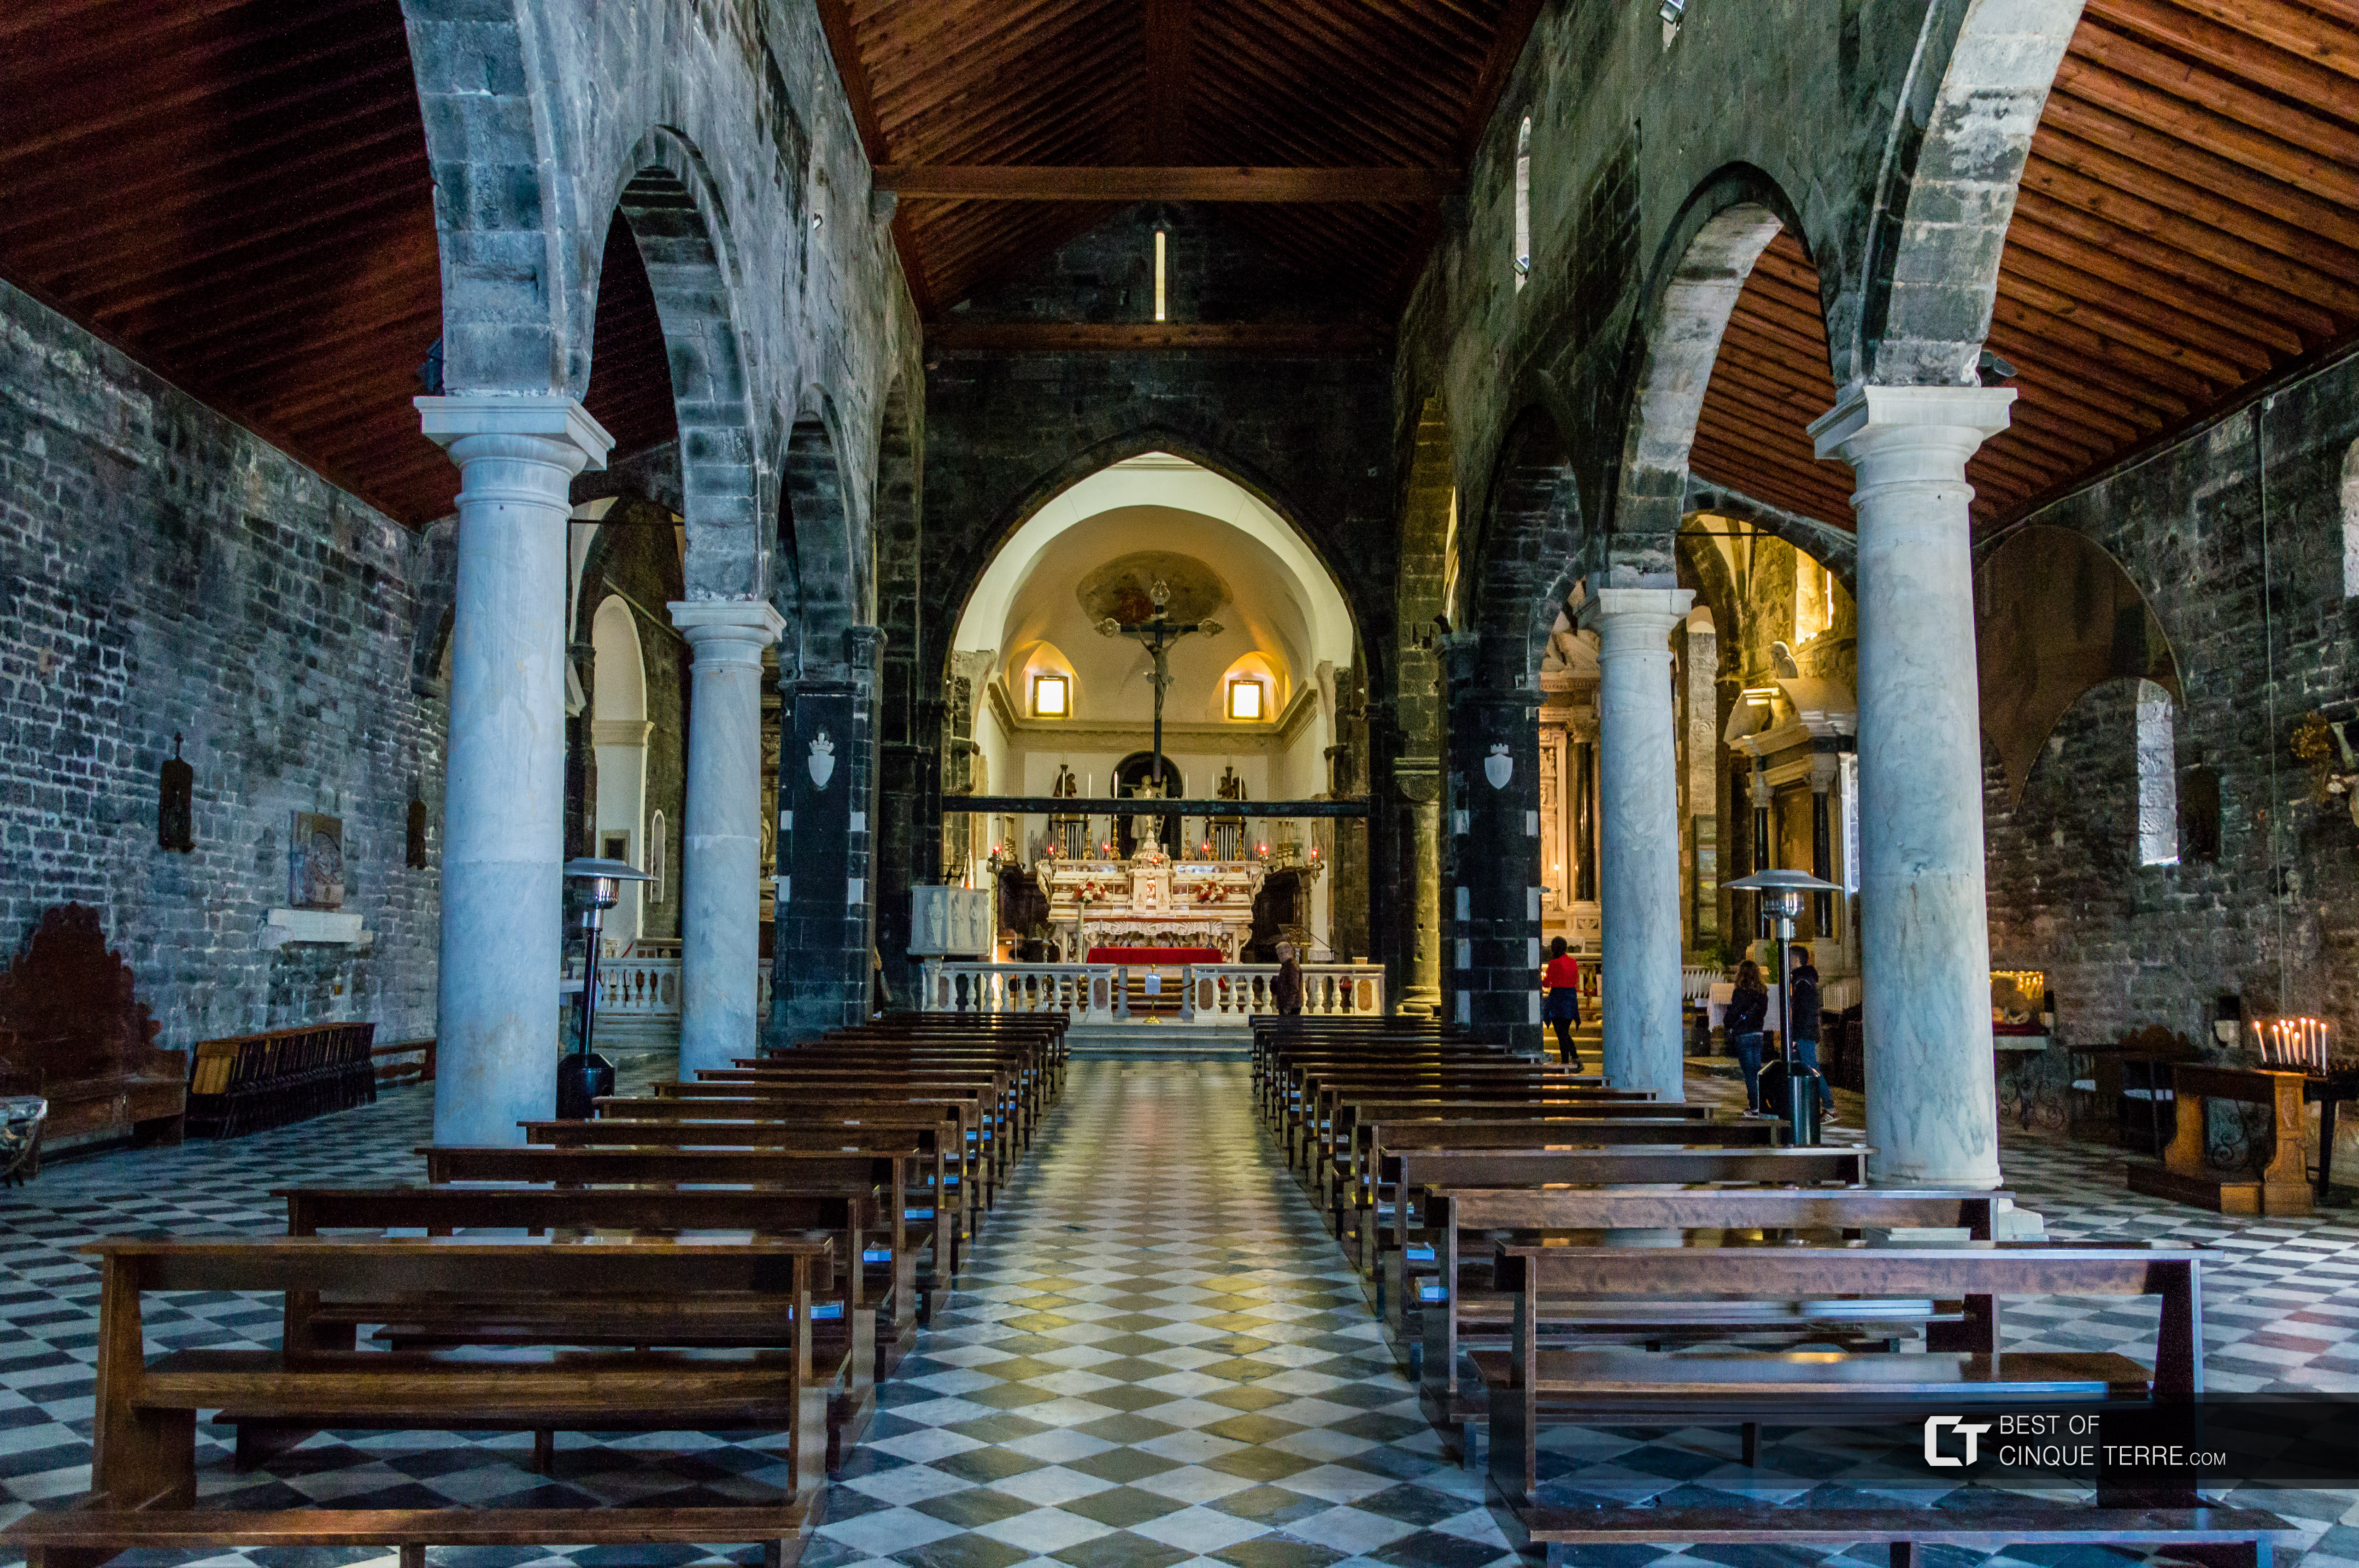 Interiorul Bisericii Sf. Petru, Portovenere, Italia